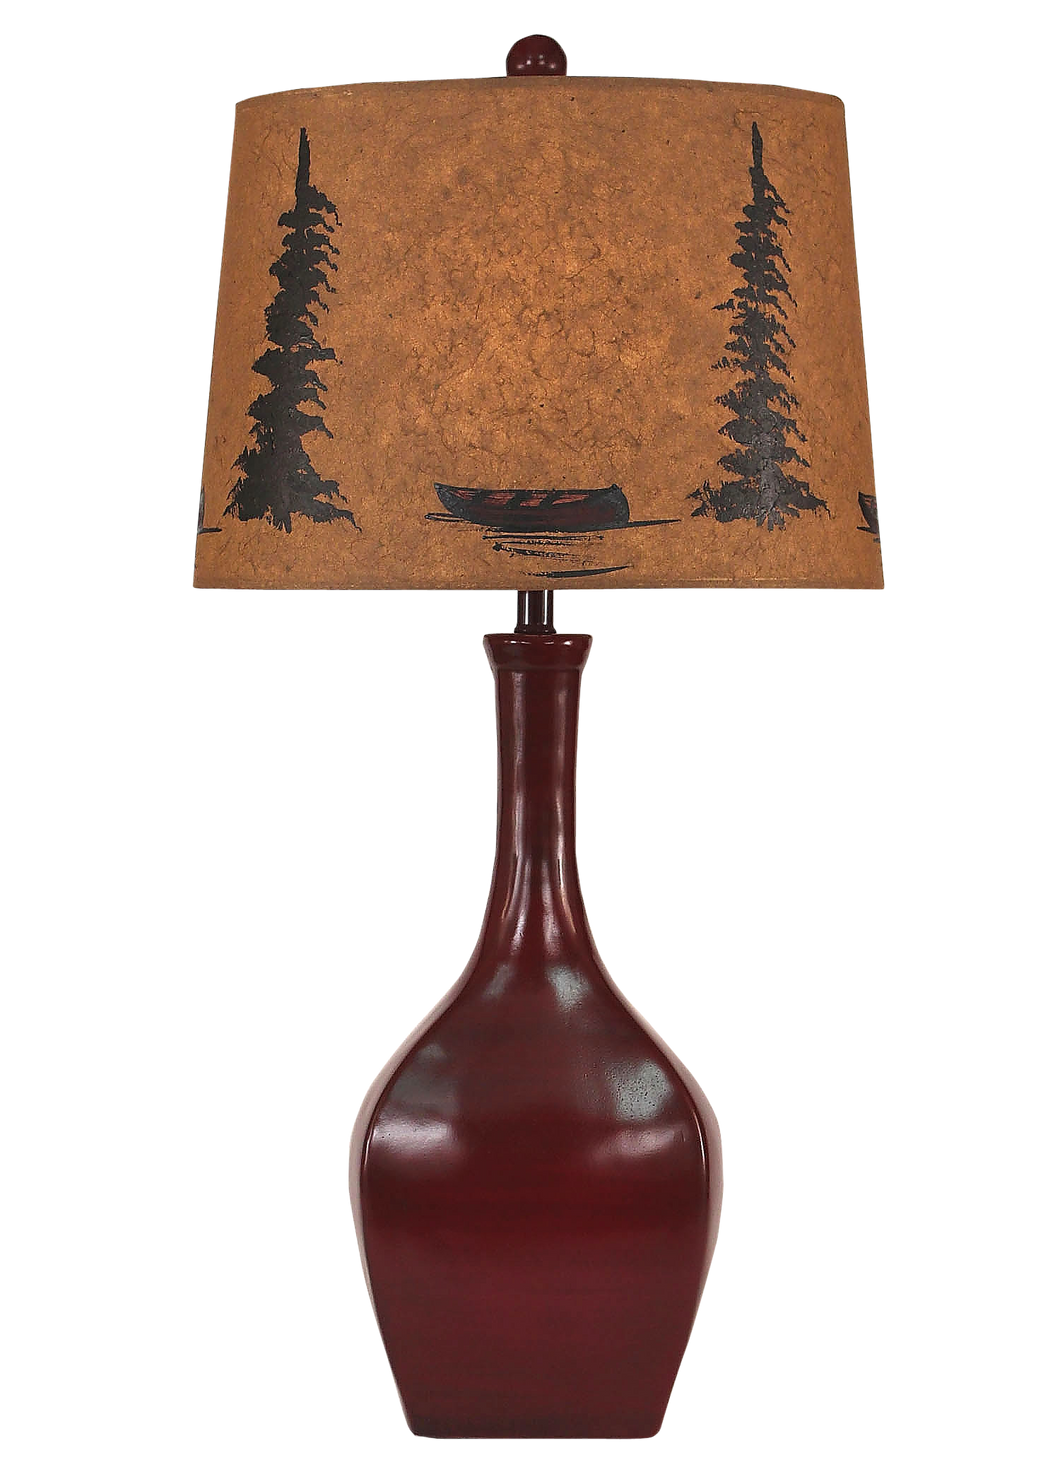 Spanish Tile Oval Genie Table Lamp w/ Canoe Scene Shade